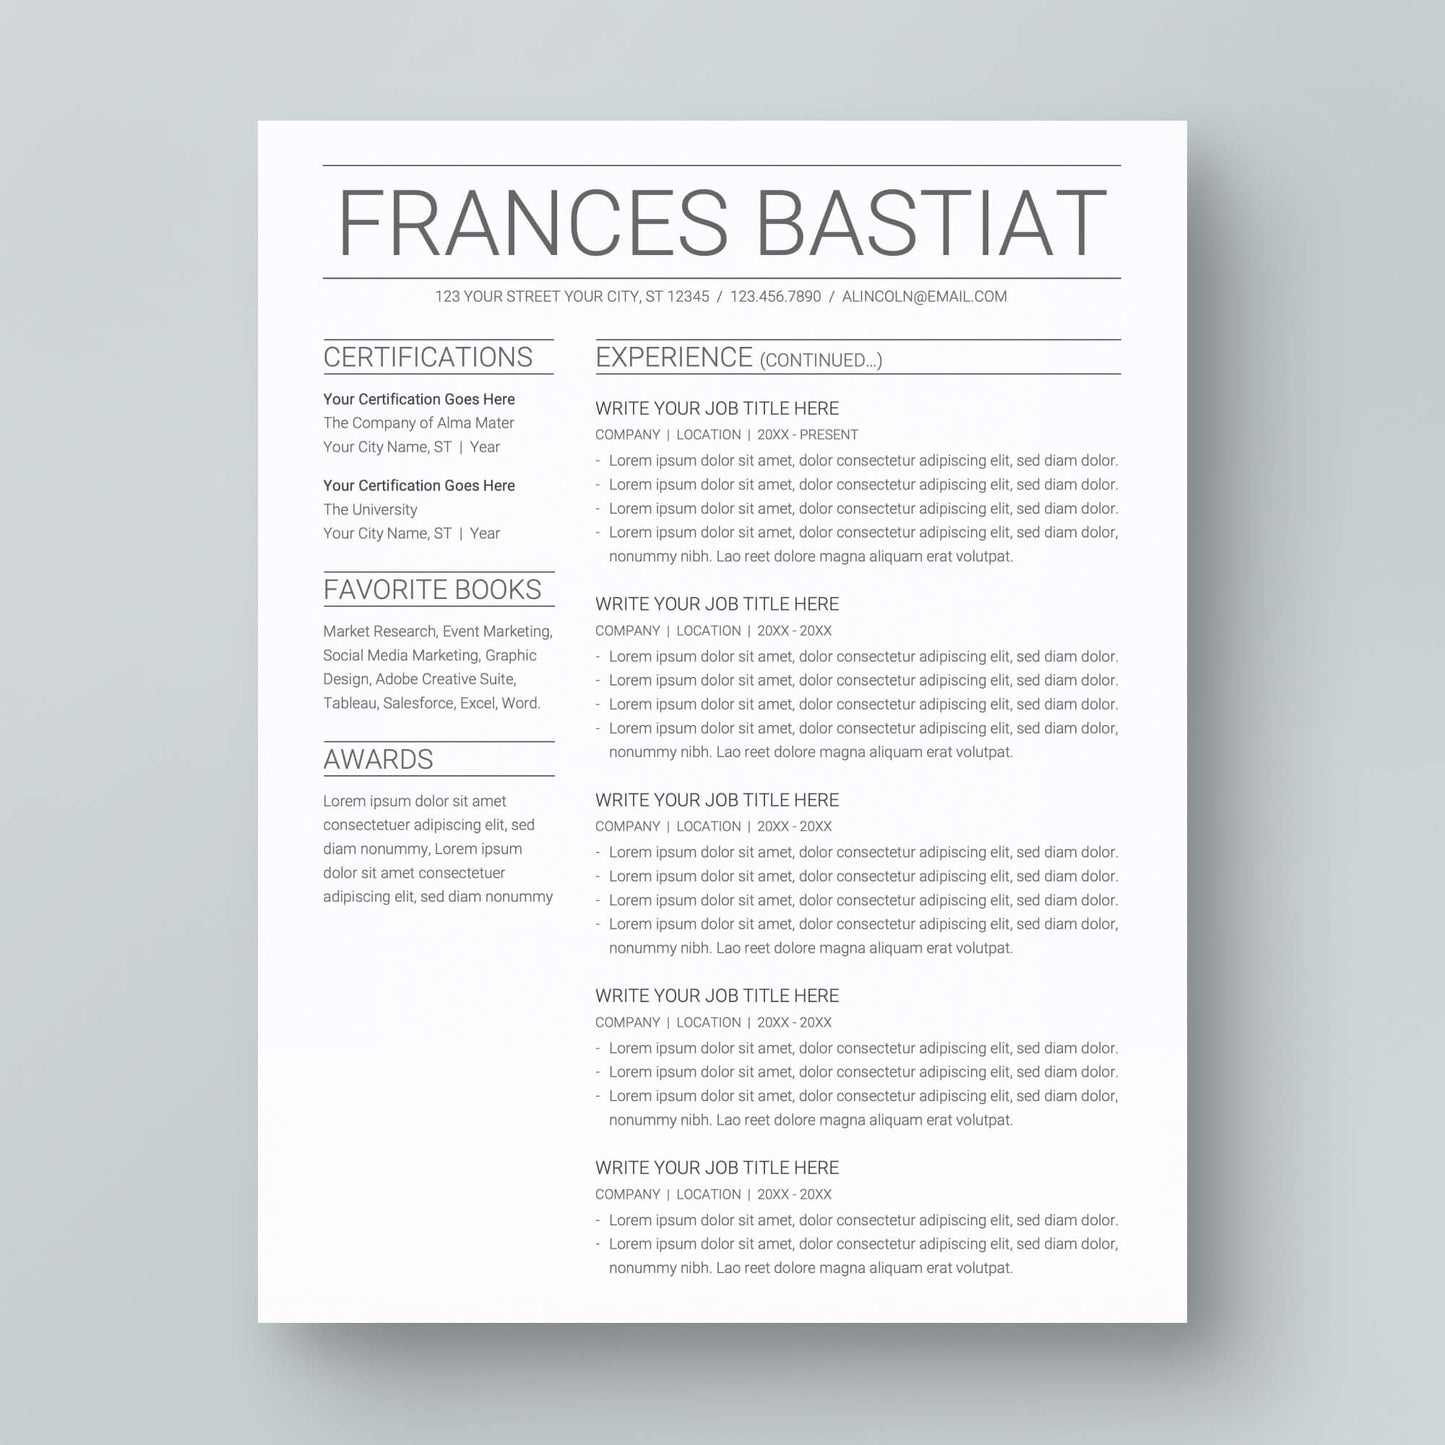 Resume Template: Frances Bastiat - MioDocs